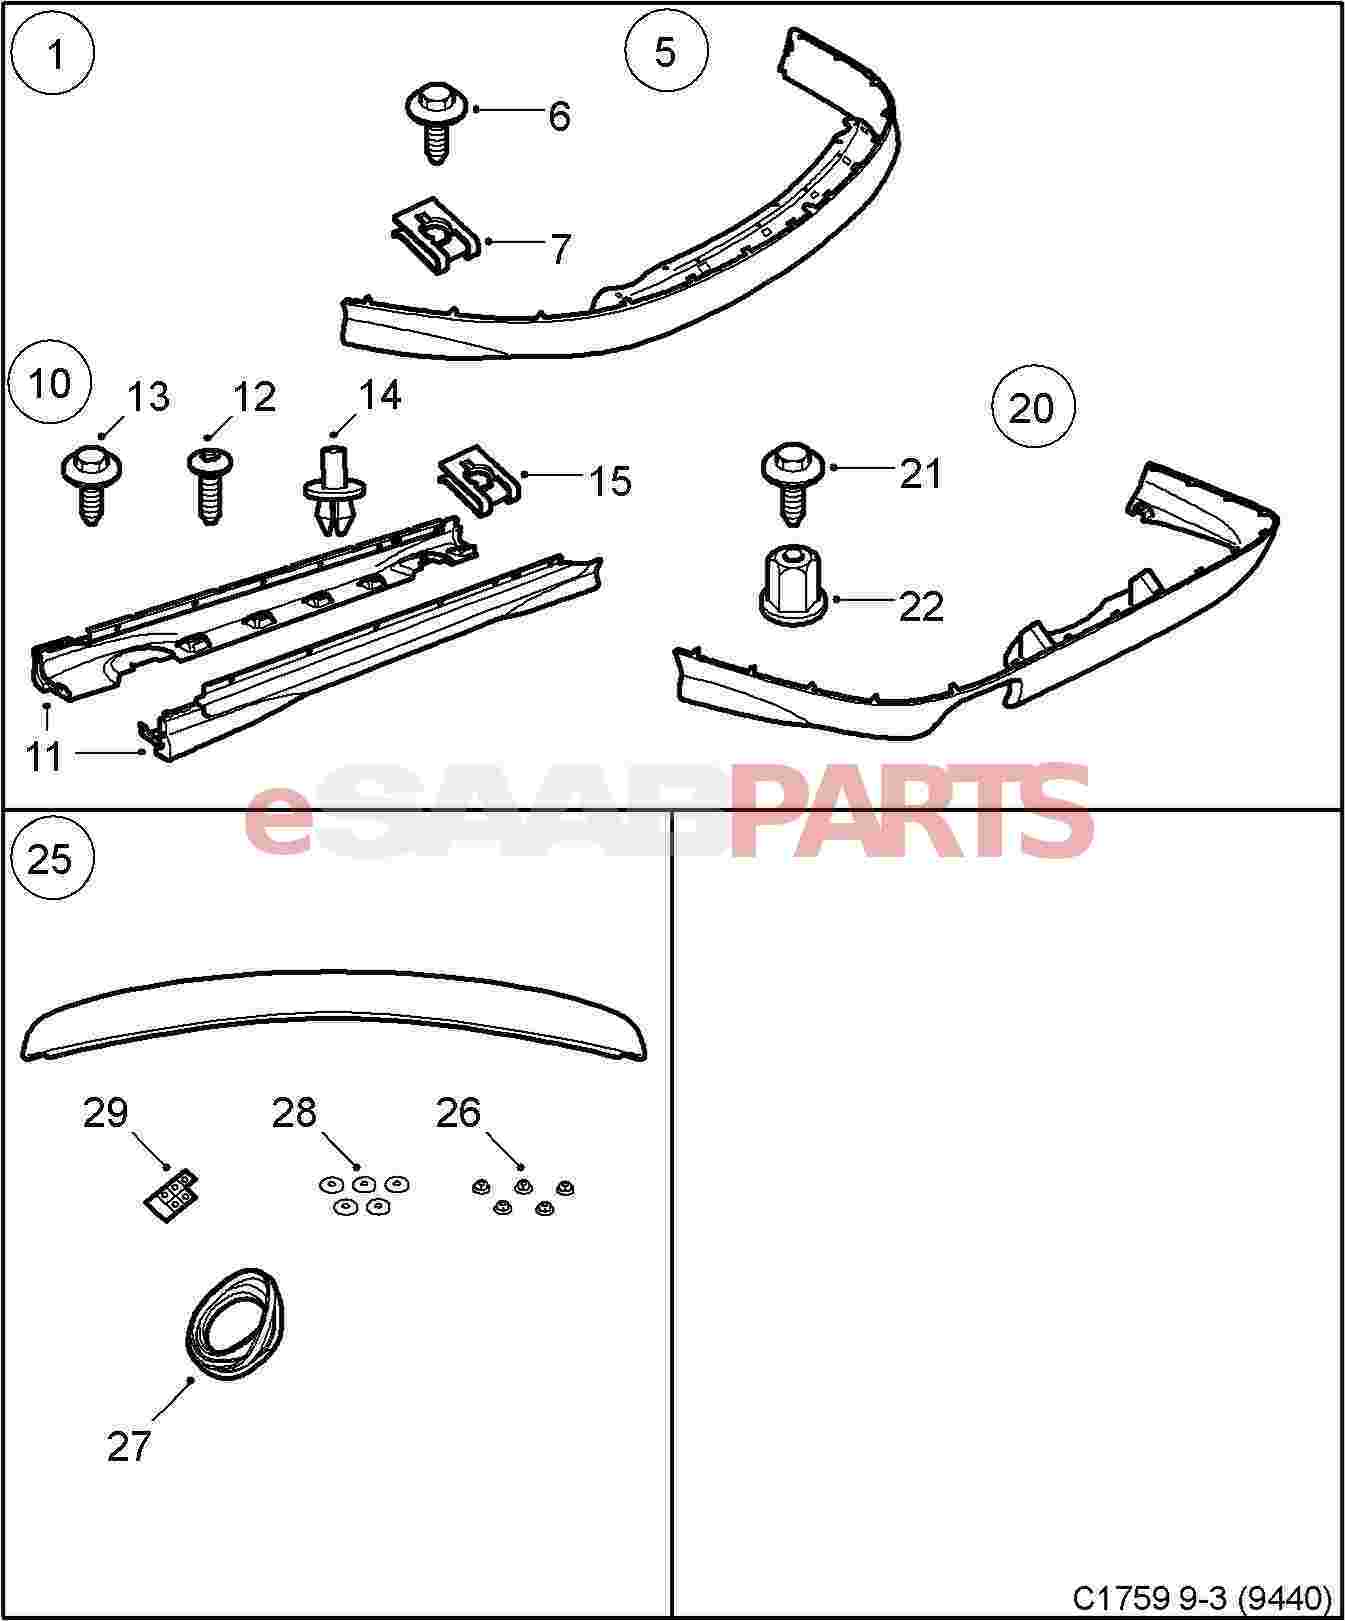 Saab 9 3 Parts Diagram - General Wiring Diagram